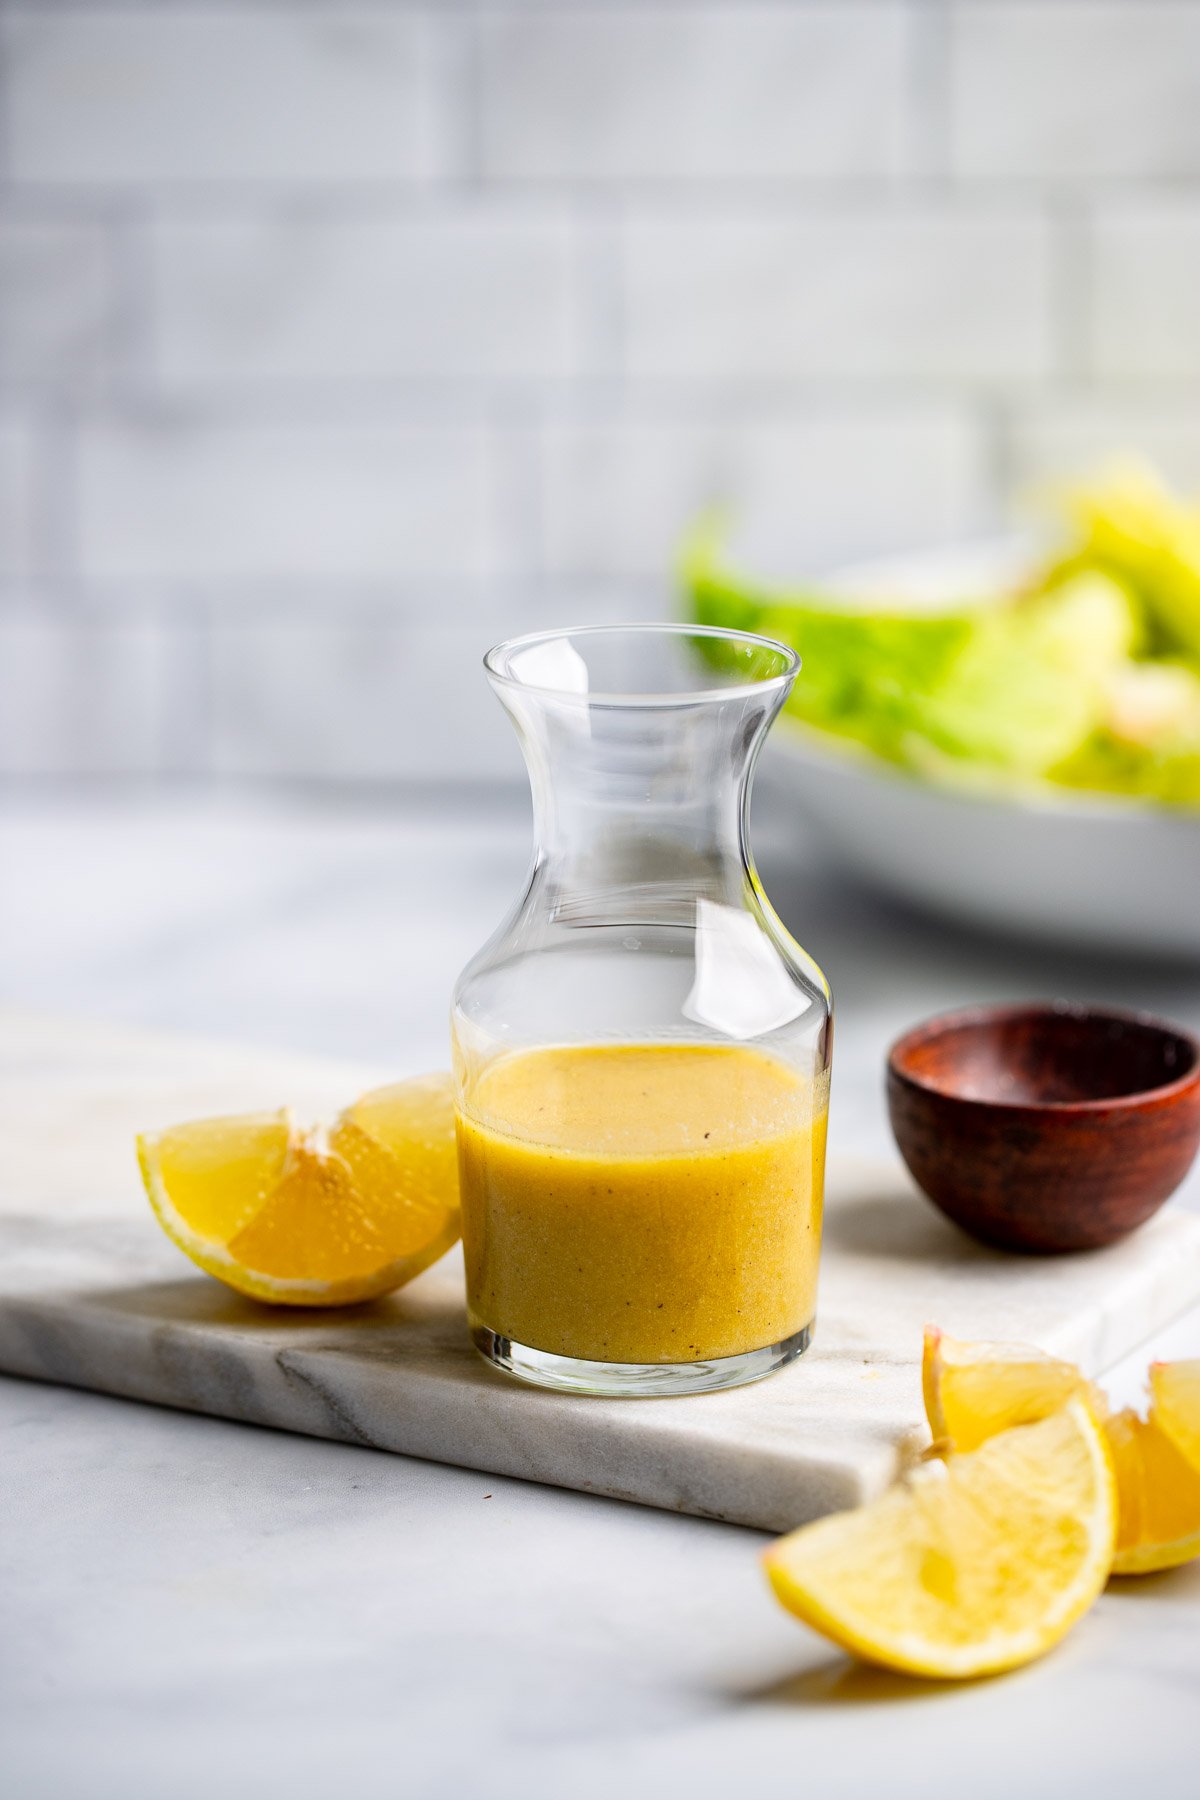 lemon dijon salad dressing in a small glass pitcher.